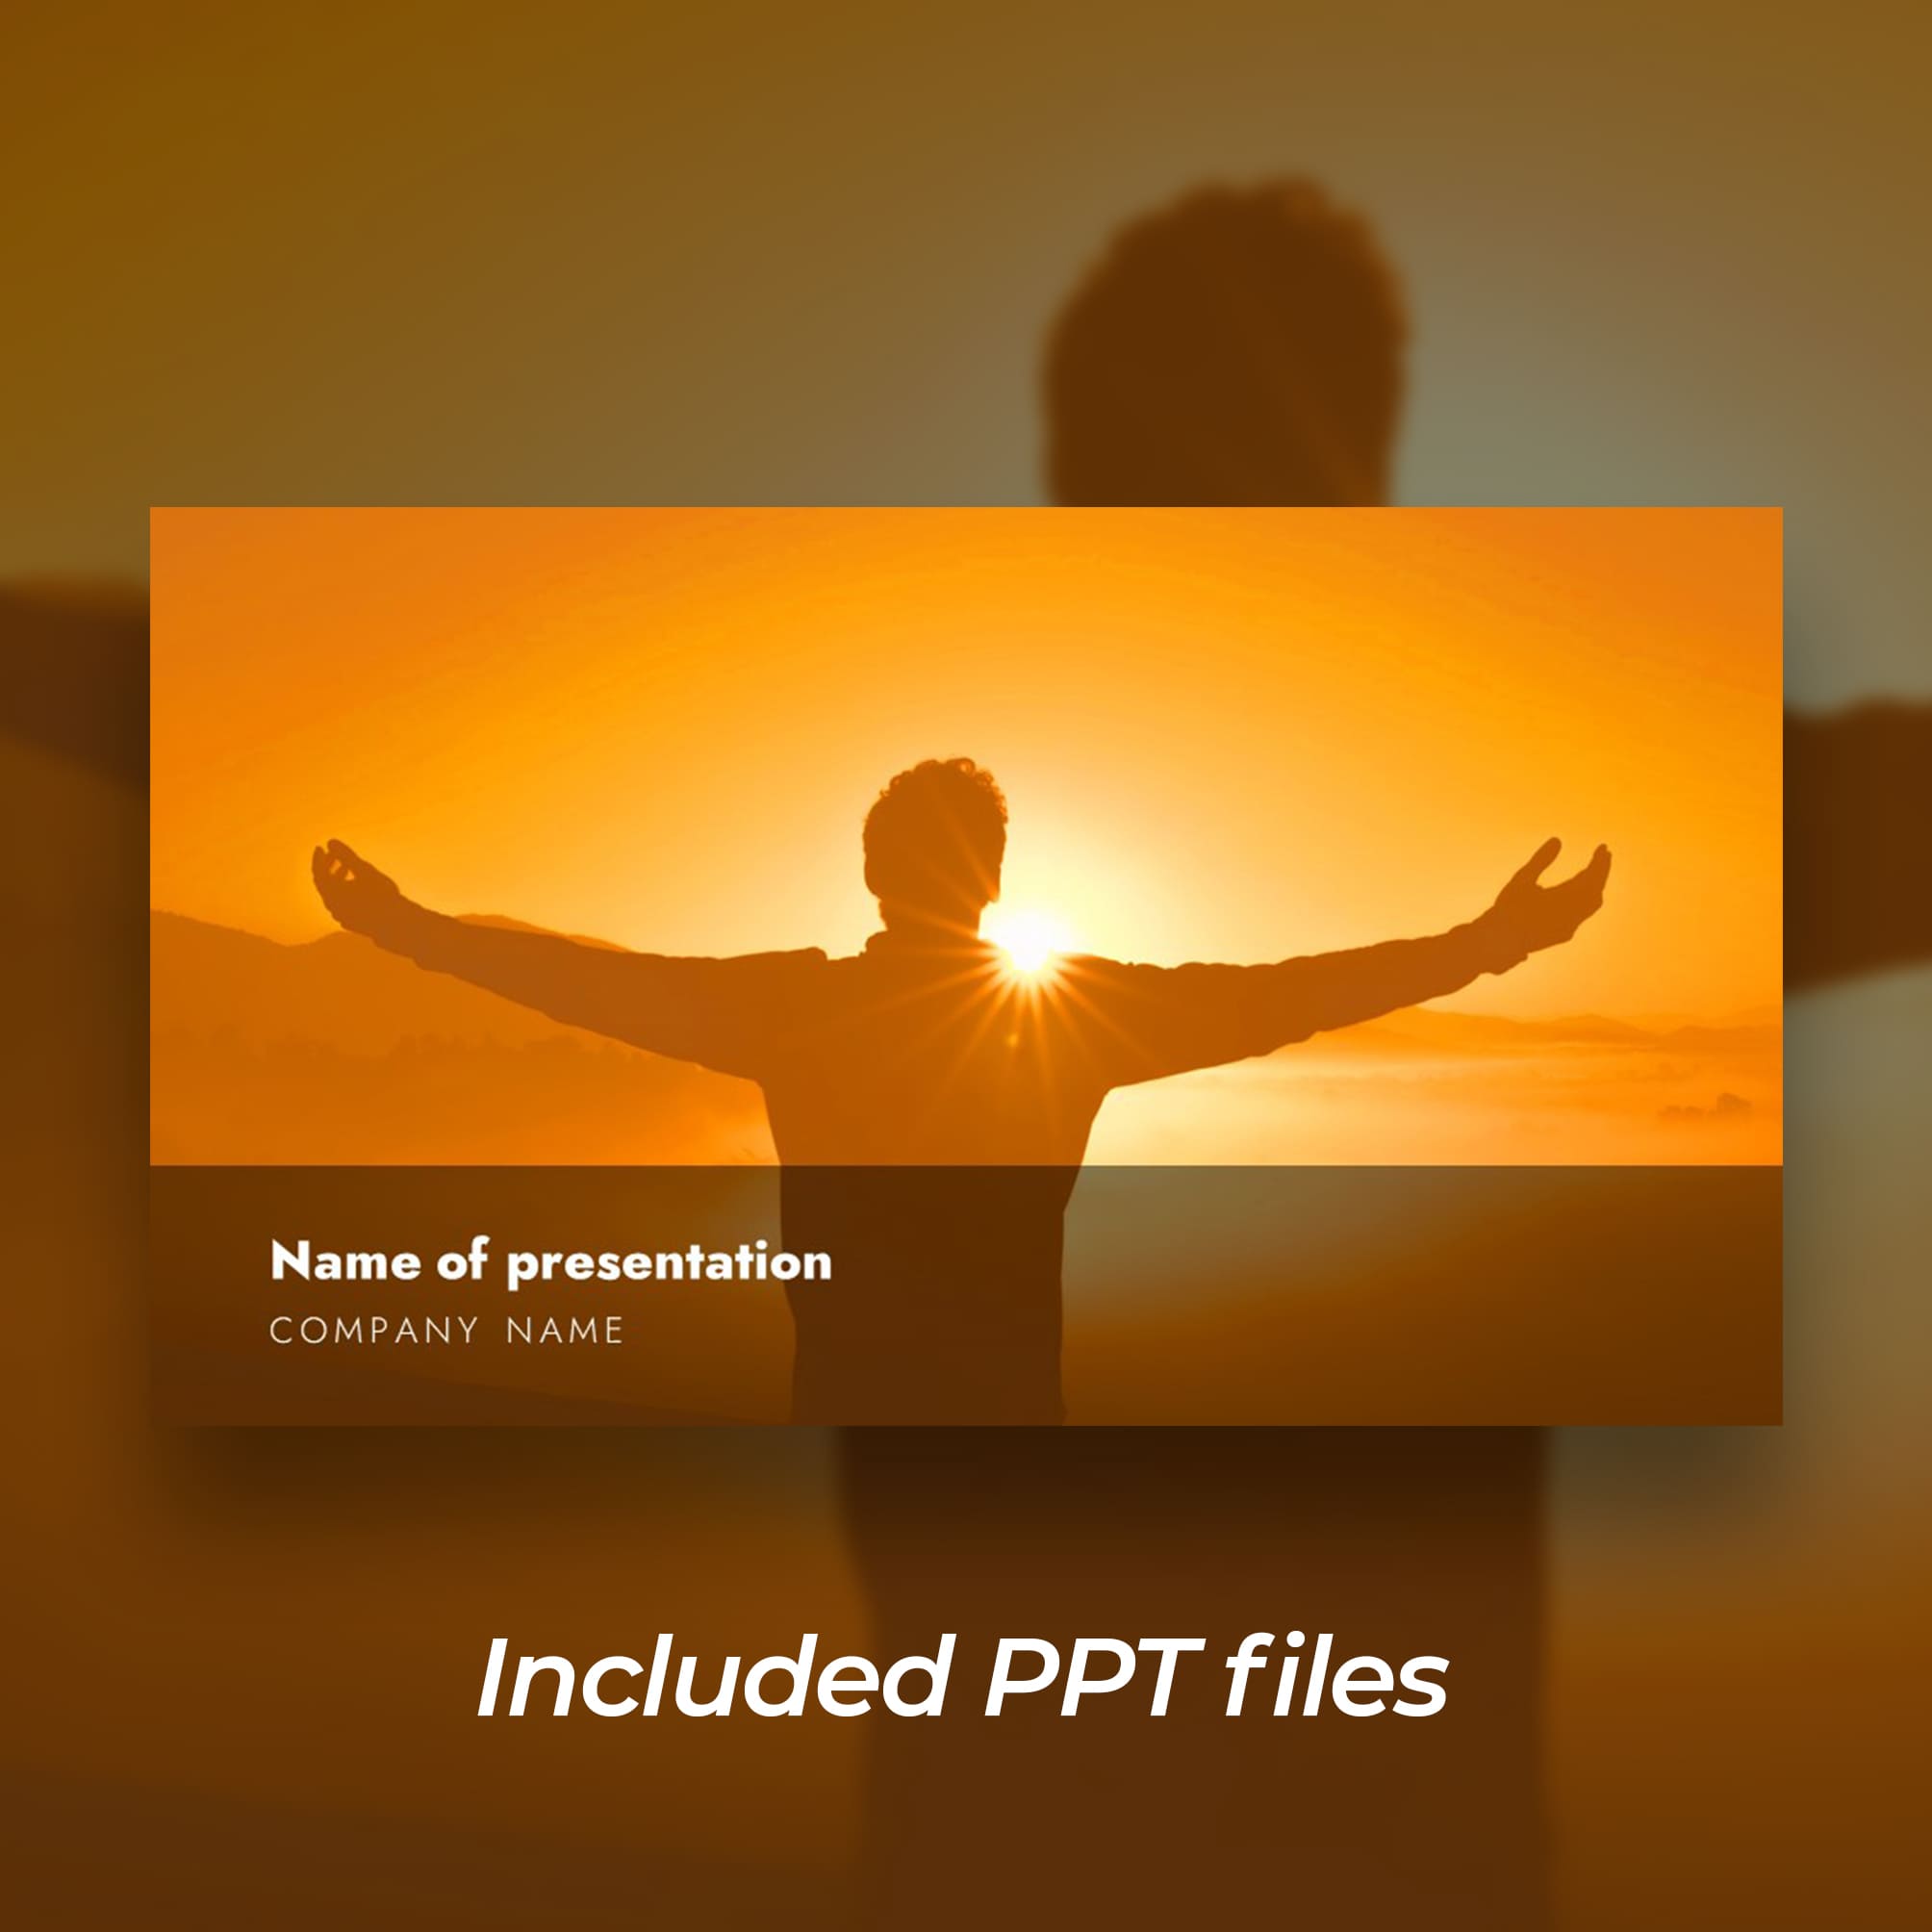 Shine - Free Worship Powerpoint Background Orange Cover.